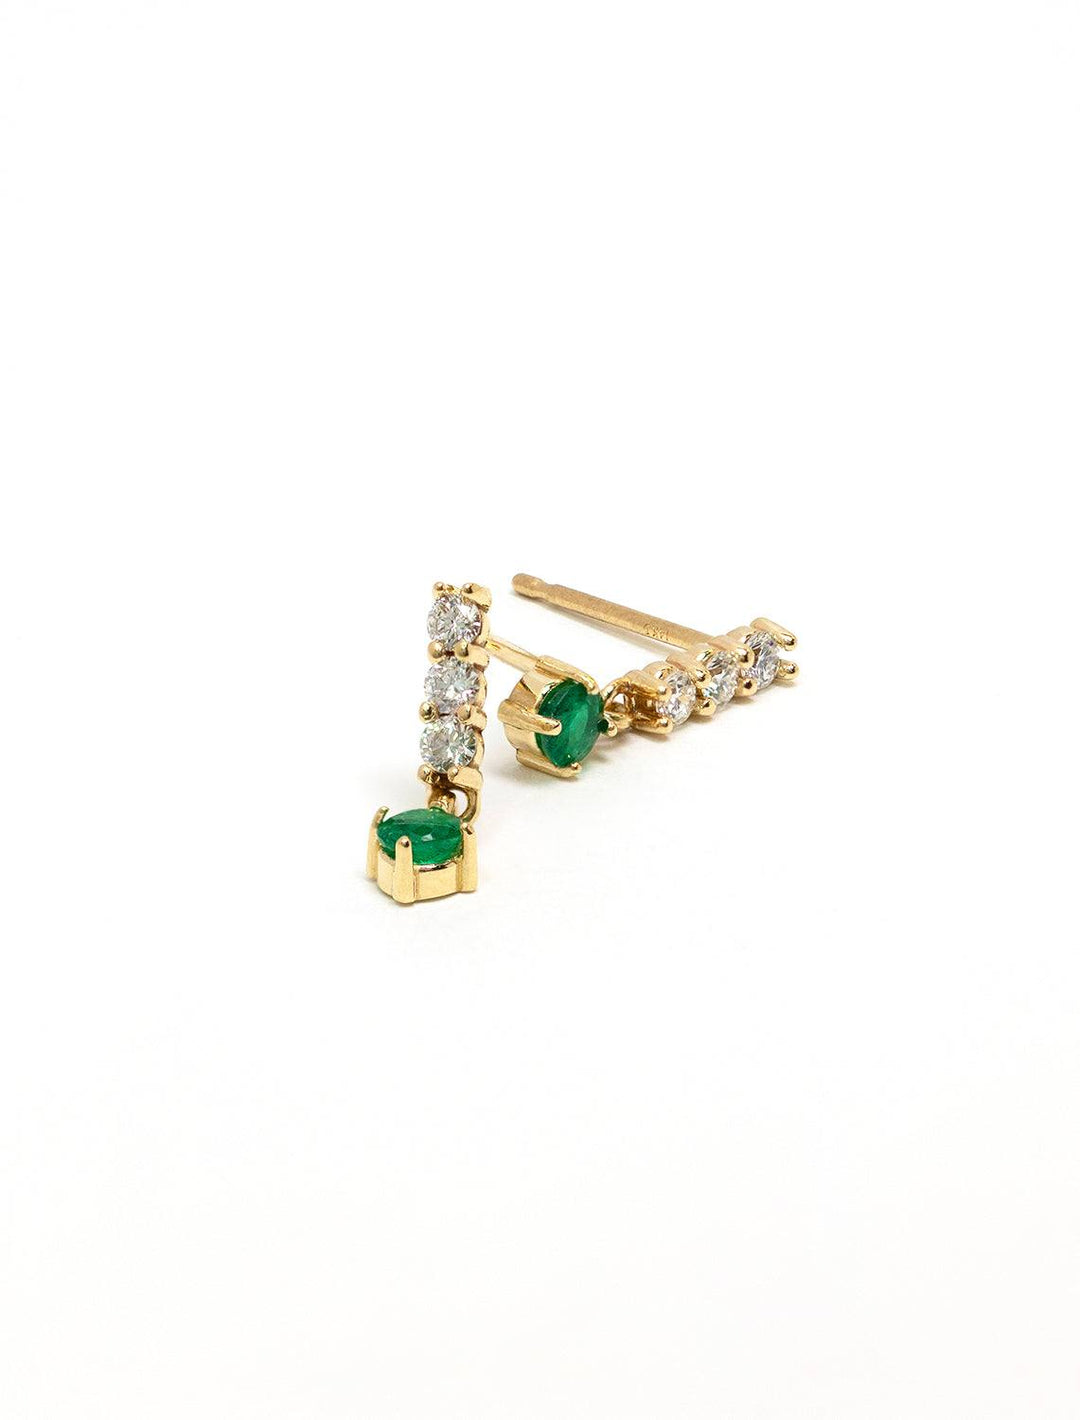 Stylized laydown of Zoe Chicco's 14k diamond bar earrings with emerald drops.